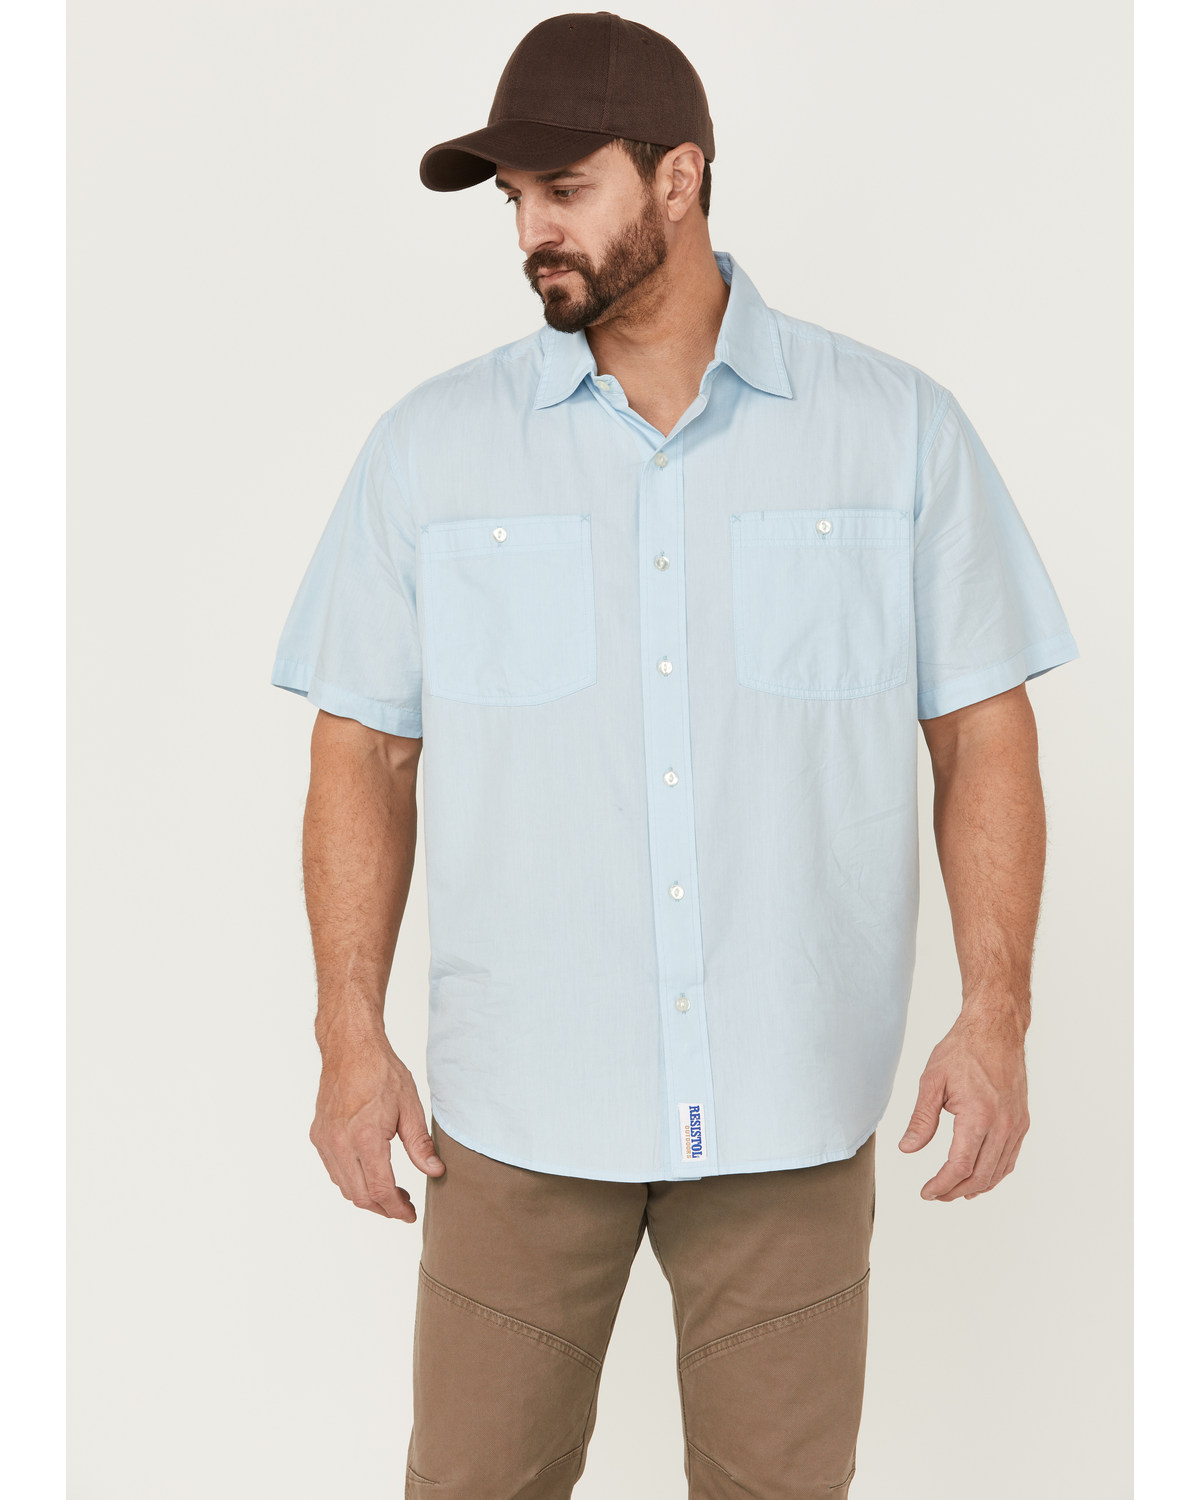 Resistol Men's Solid Short Sleeve Button-Down Western Shirt